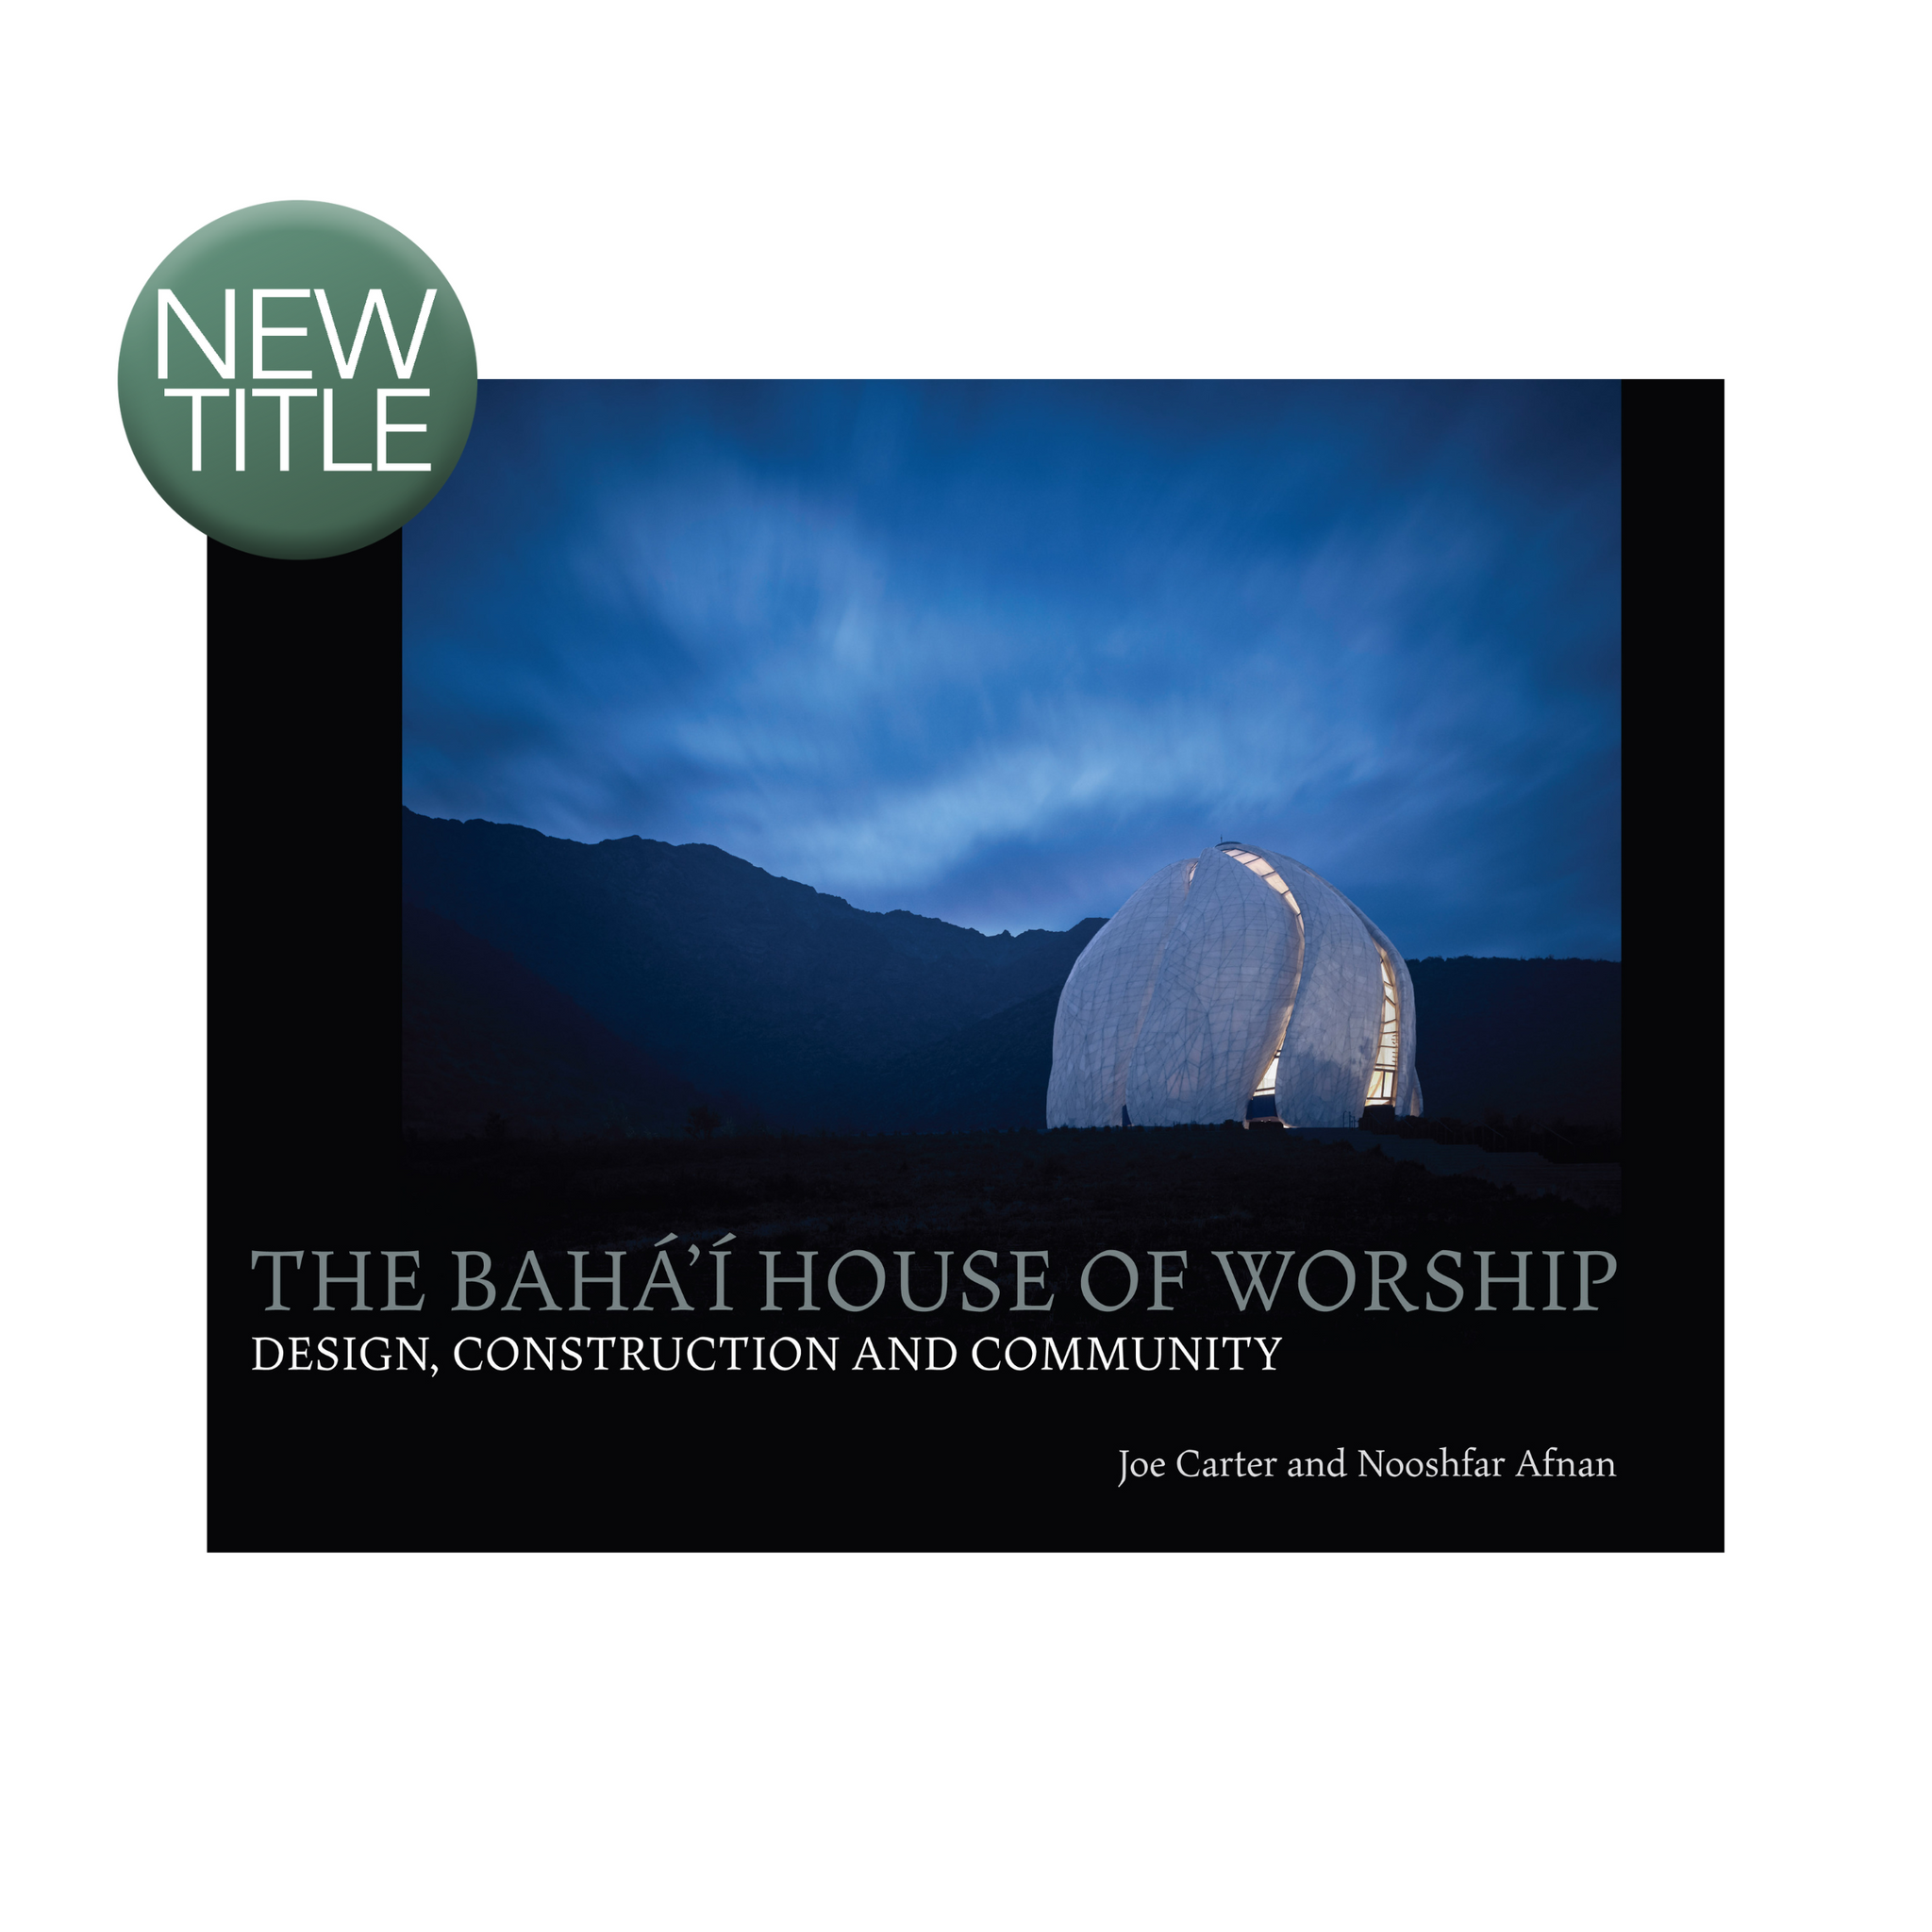 Baha'i House of Worship - Design, Construction and Community